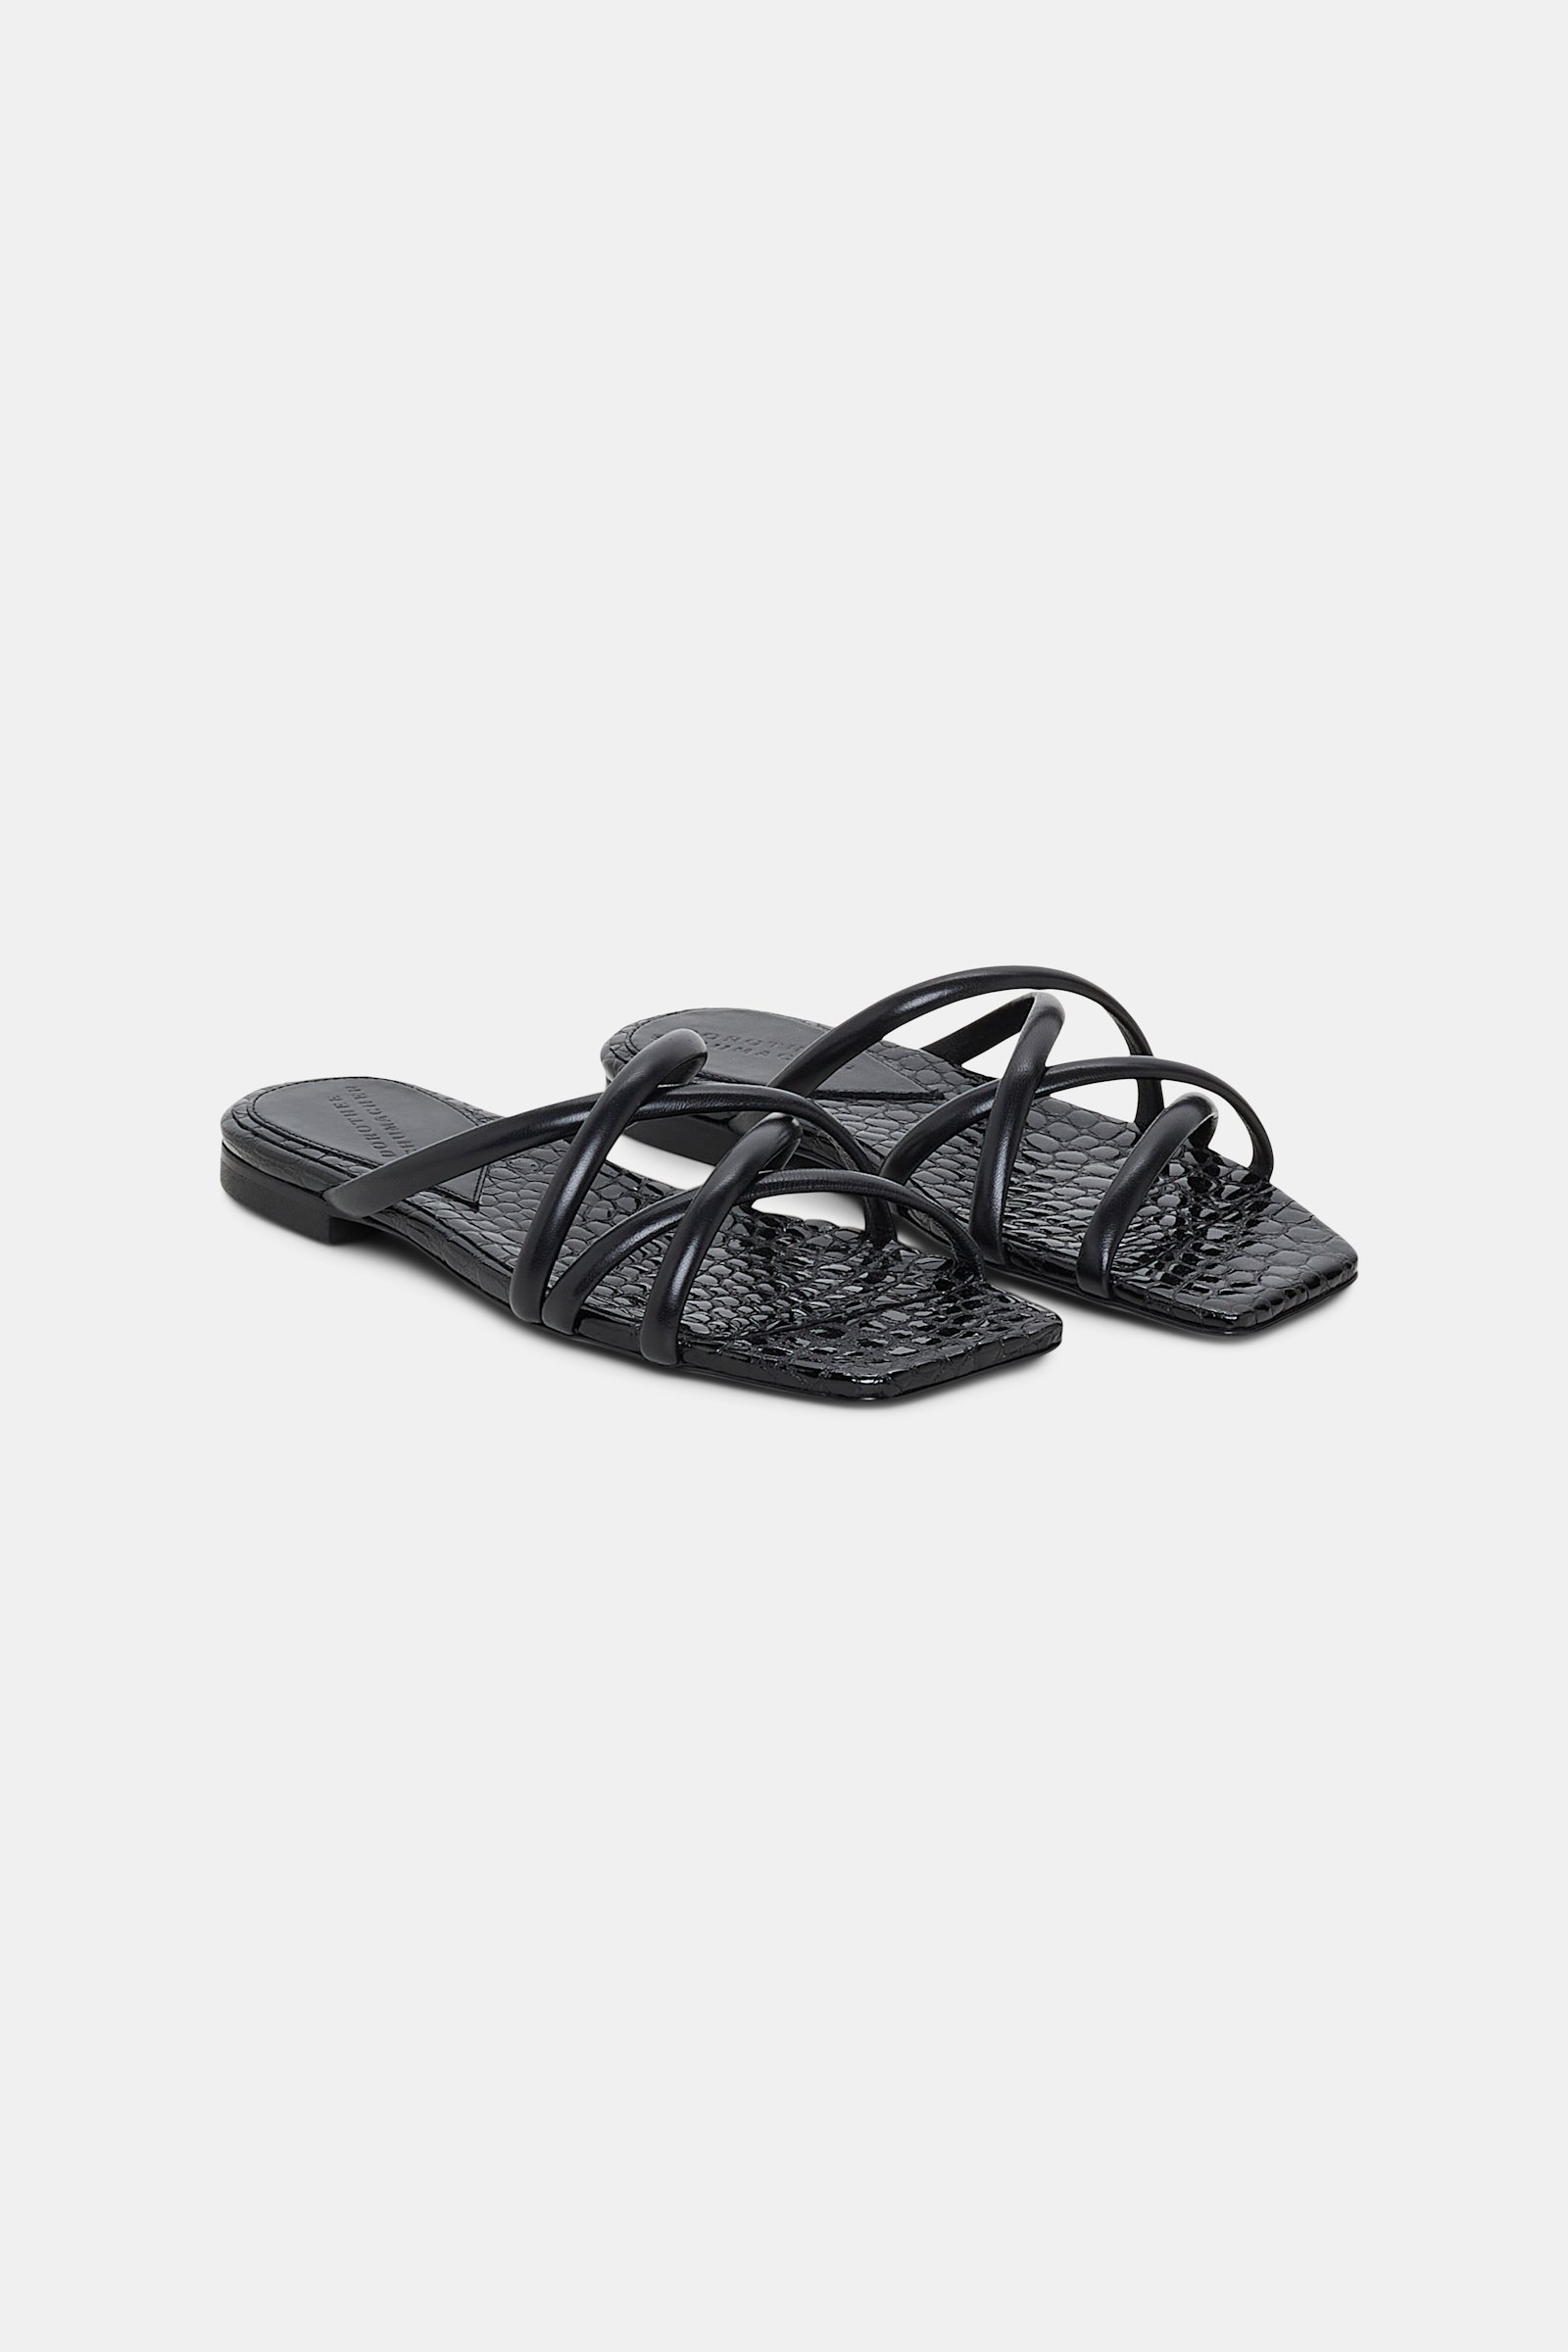 Dorothee Schumacher Square toe flat strappy sandals pure black